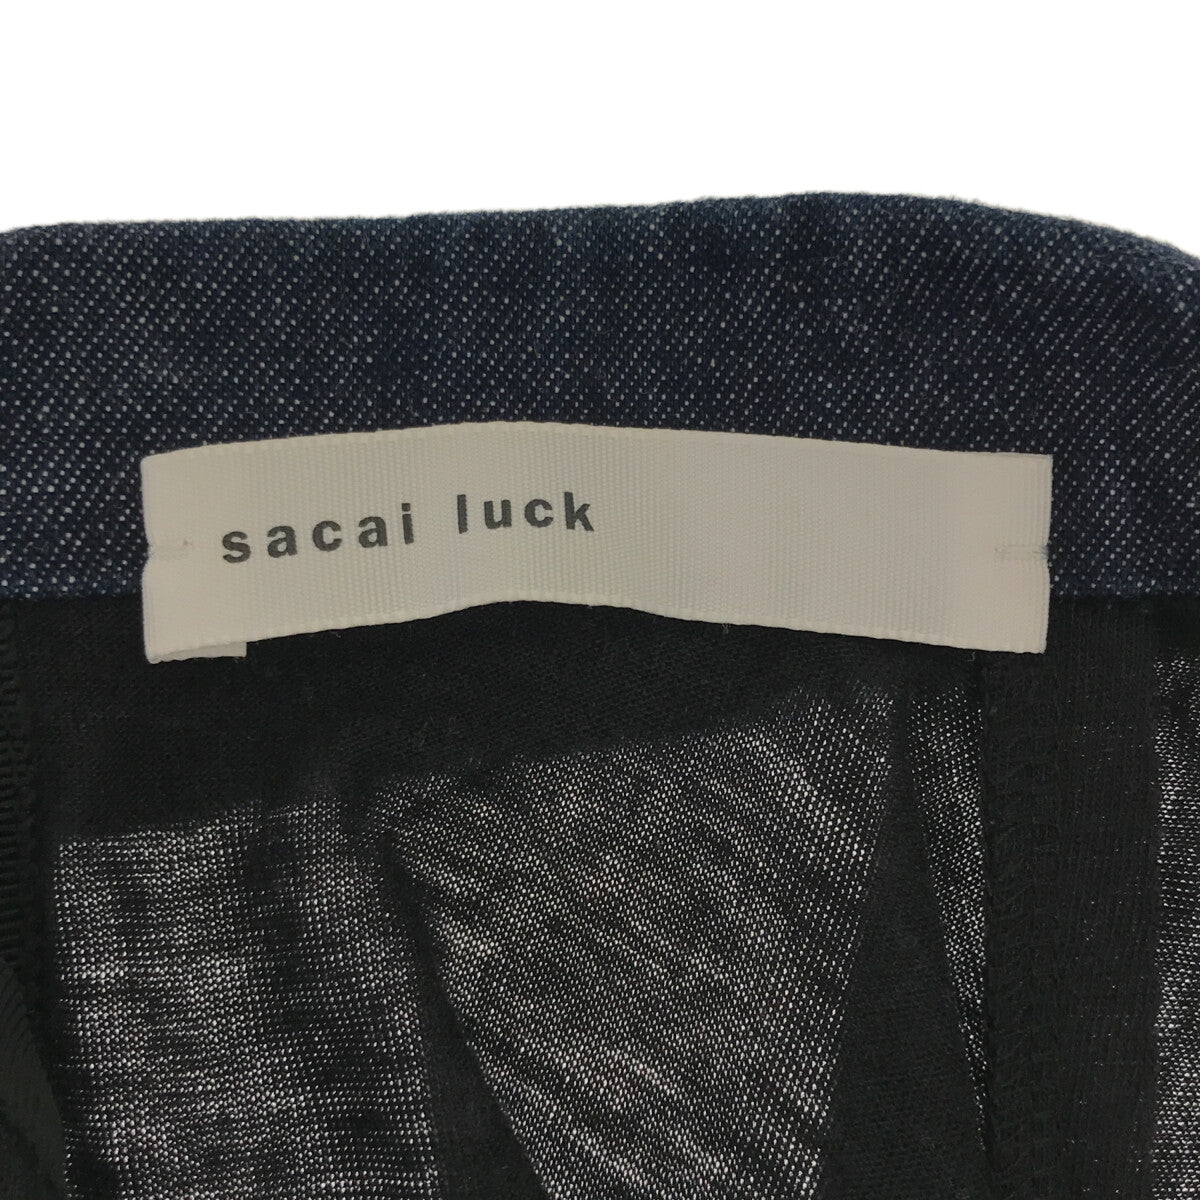 sacai luck / サカイラック | 丸襟 デニム切替 バックリボン ビジュー